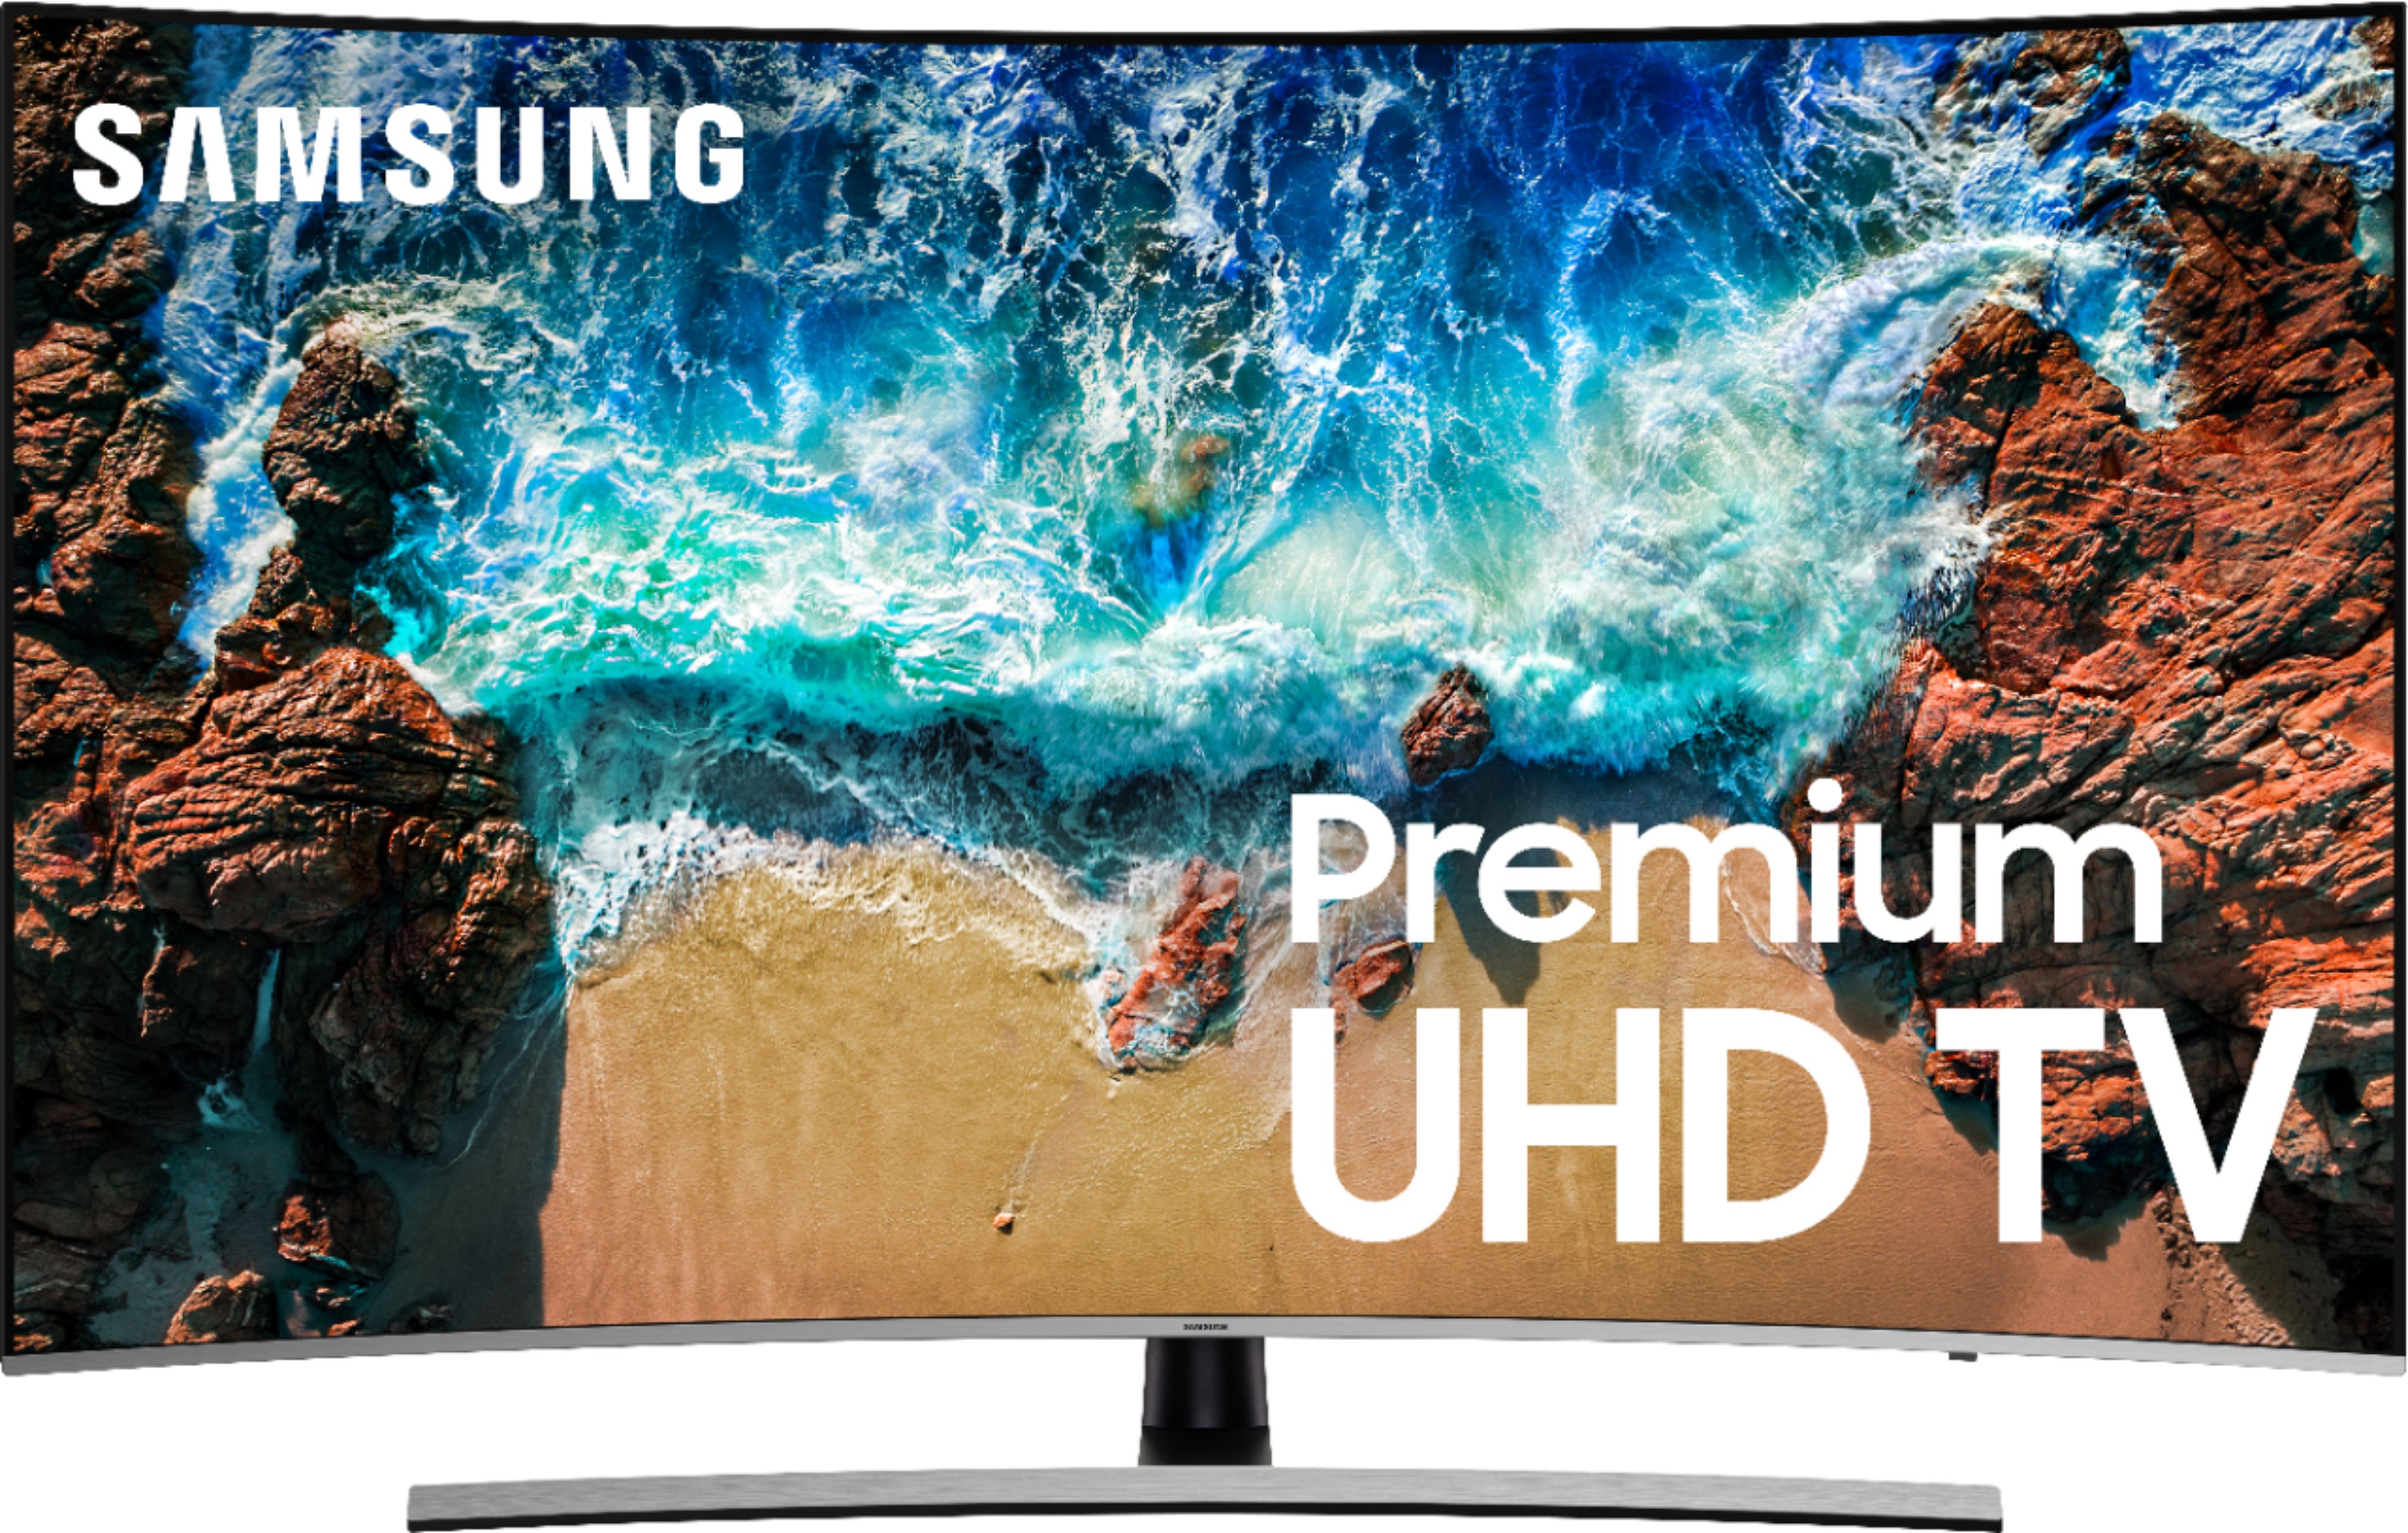 Tektonisch tong Verdeelstuk Best Buy: Samsung 55" Class LED Curved NU8500 Series 2160p Smart 4K UHD TV  with HDR UN55NU8500FXZA